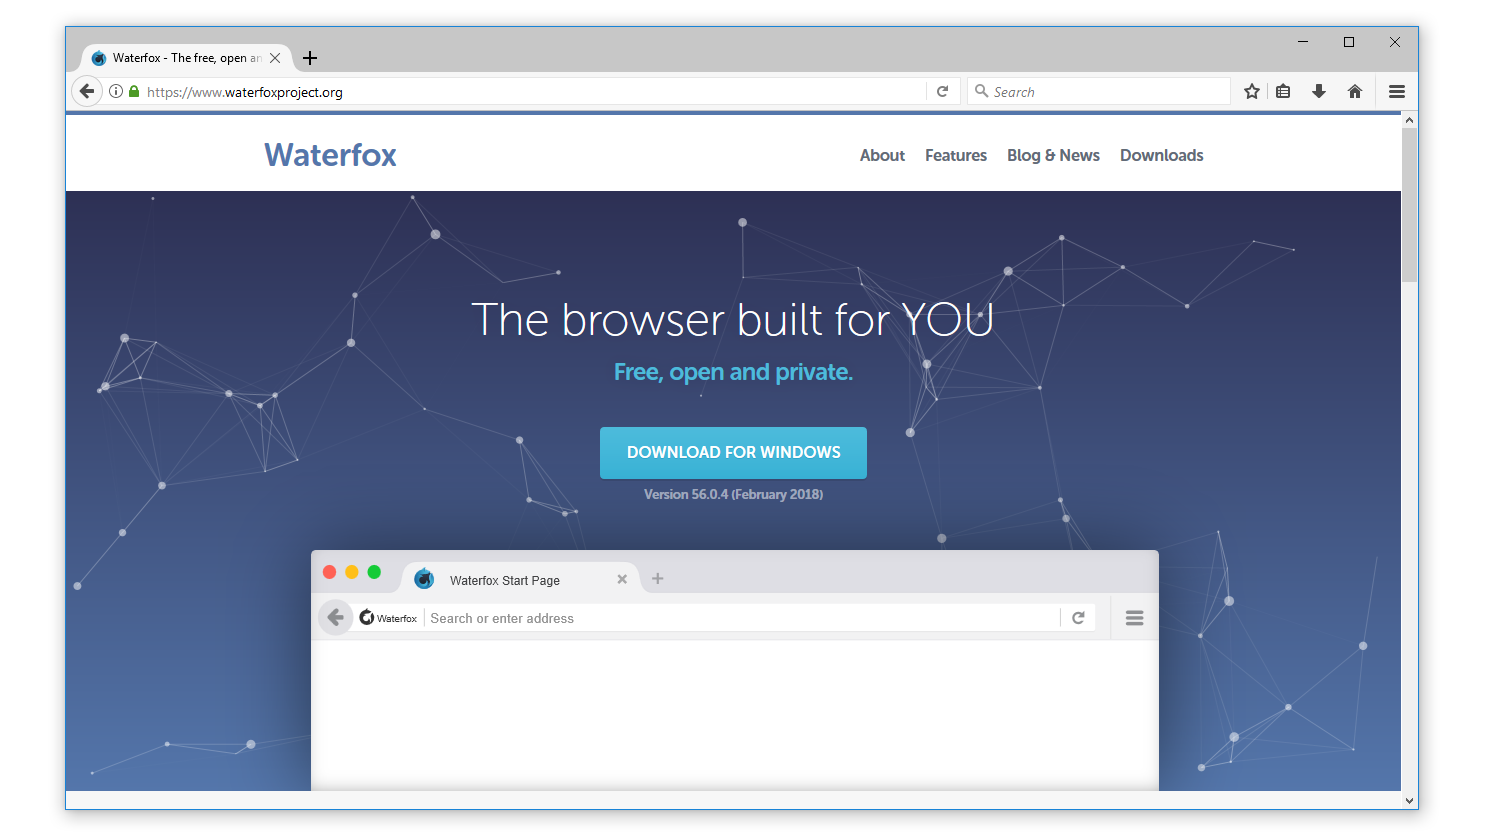 Waterfox - Privacyvriendelijk Firefox-alternatief